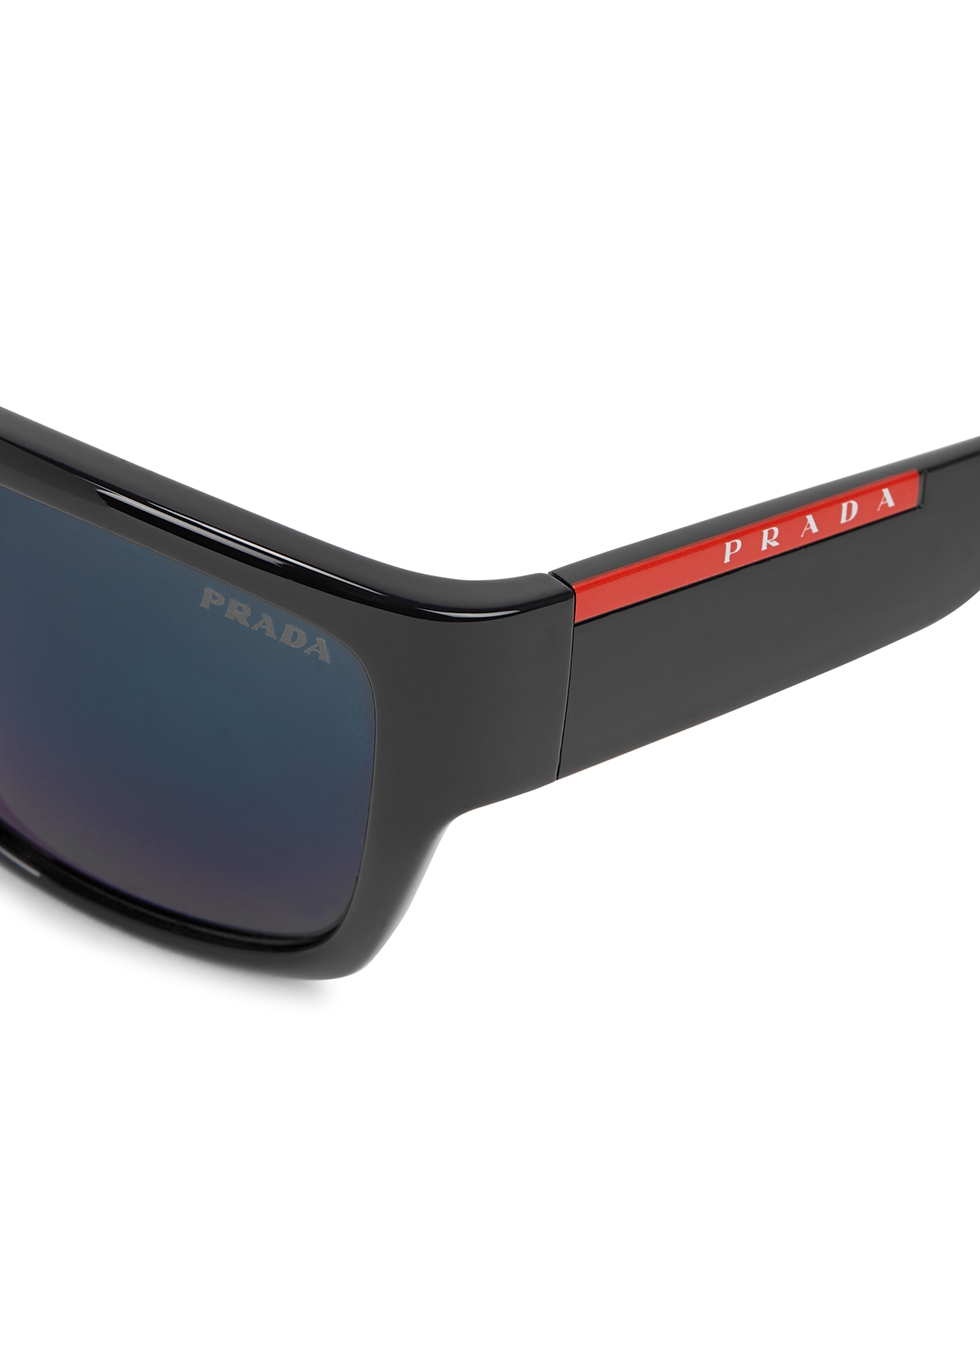 Prada Navy D-frame sunglasses - Harvey 